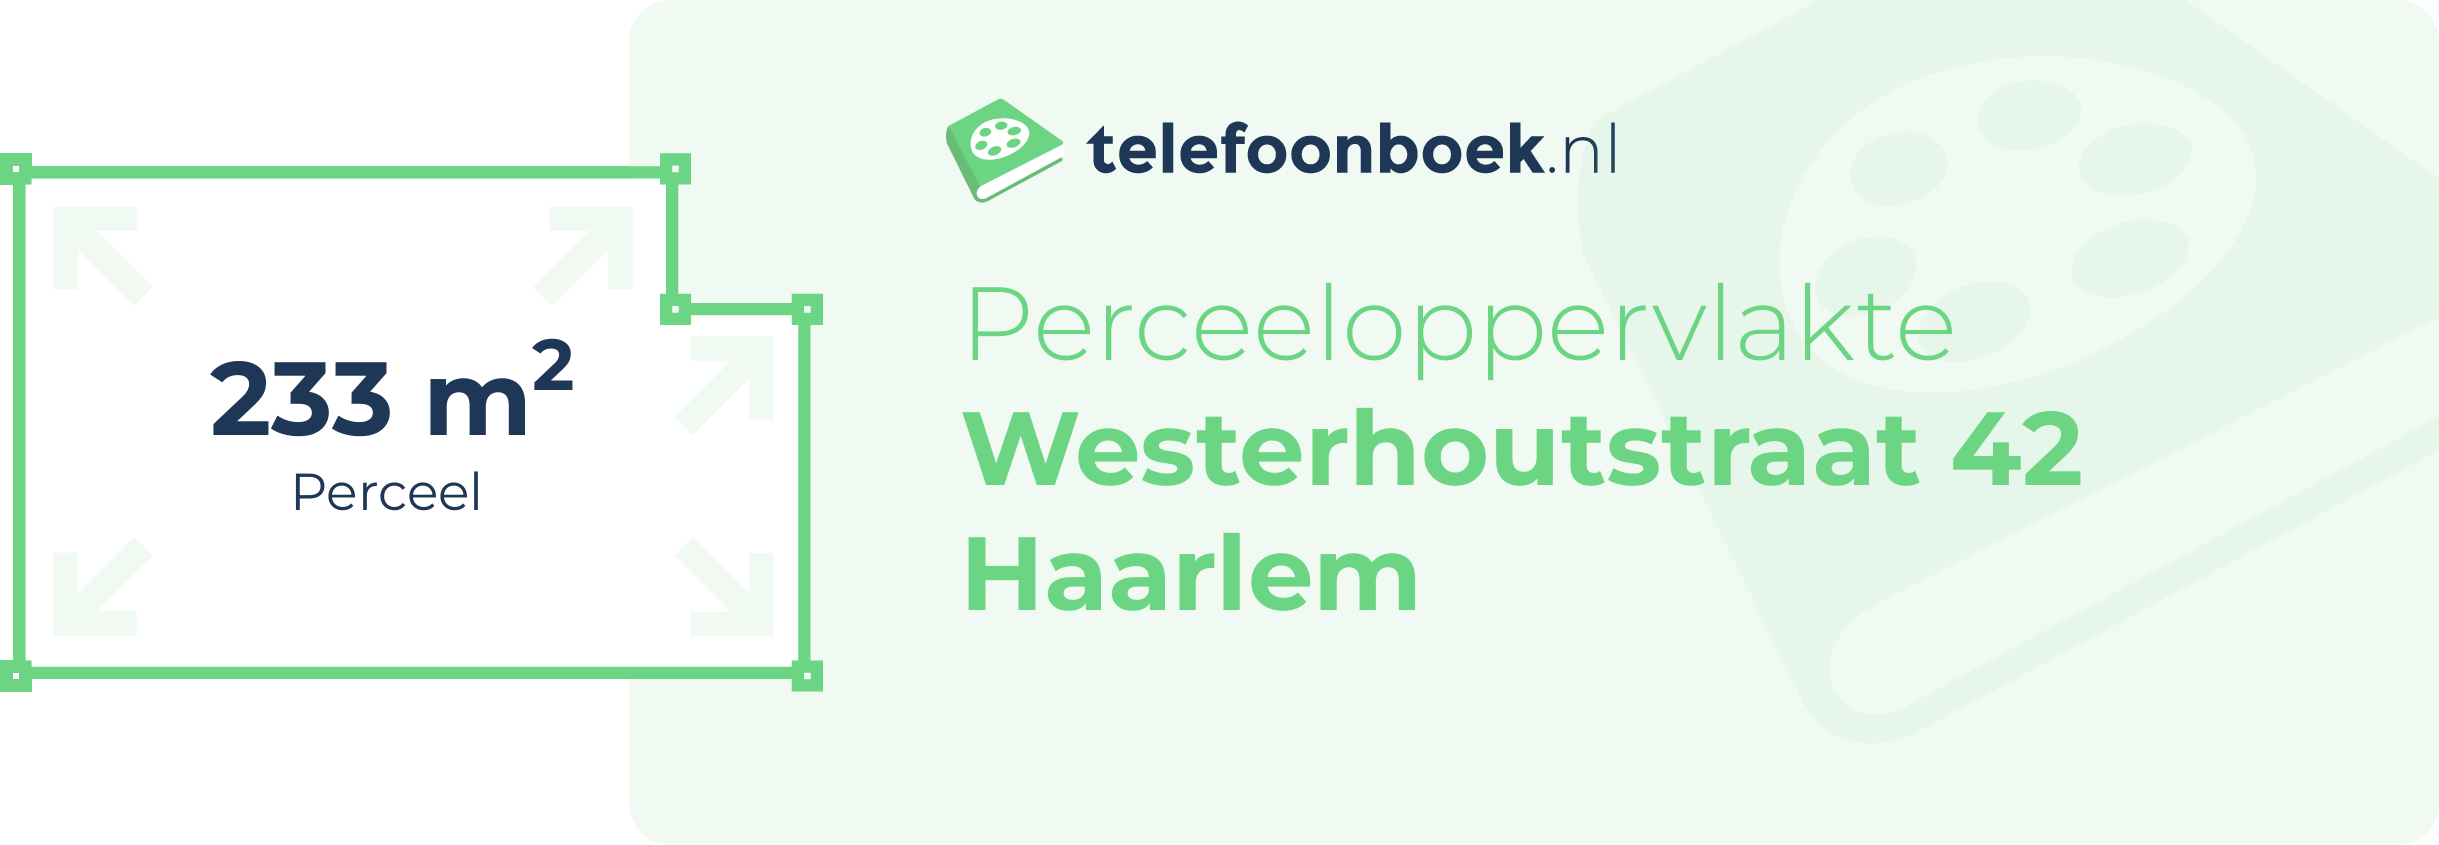 Perceeloppervlakte Westerhoutstraat 42 Haarlem